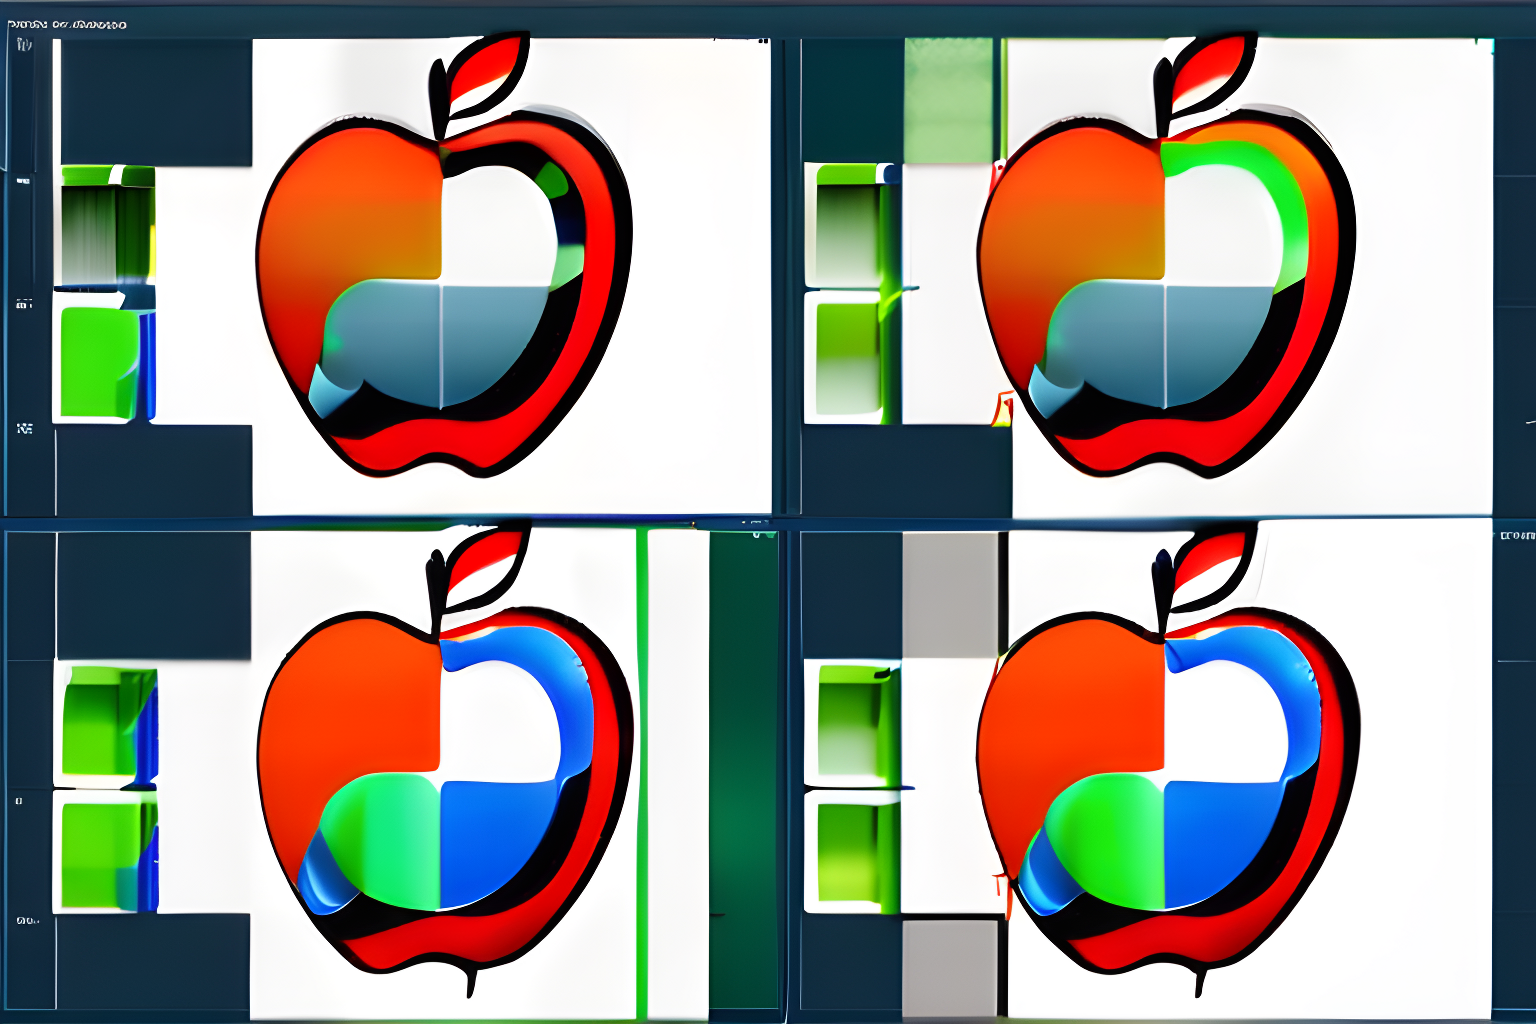 create an image of the apple logo